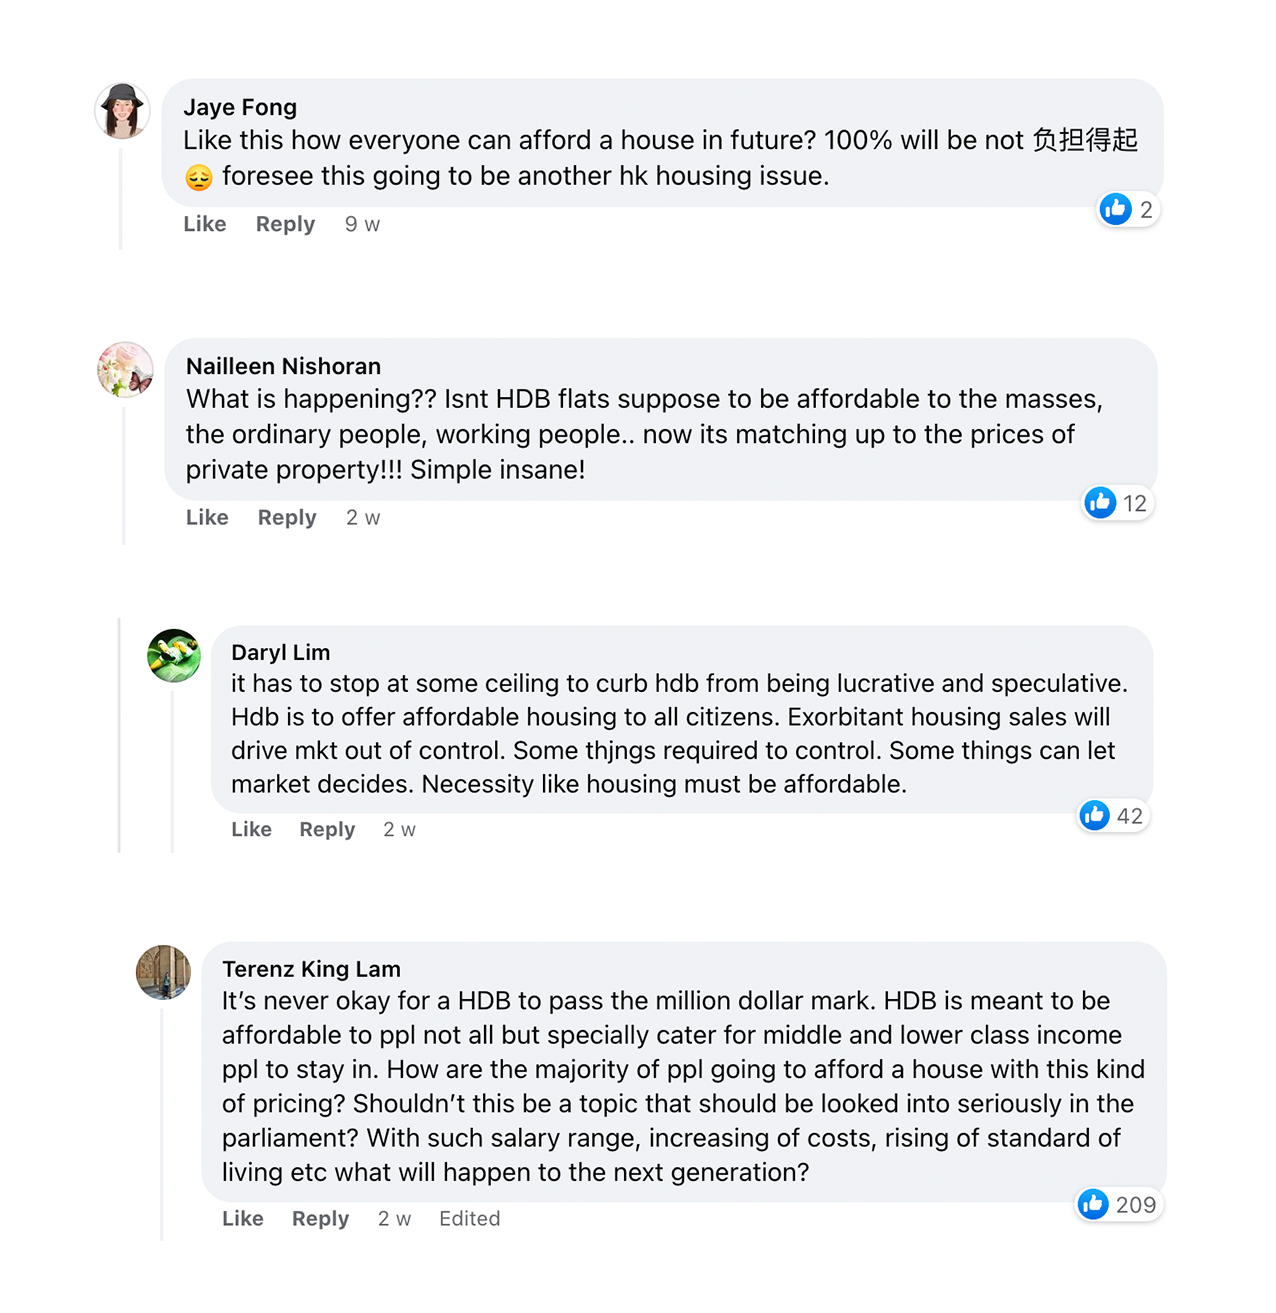 Screenshots of comments